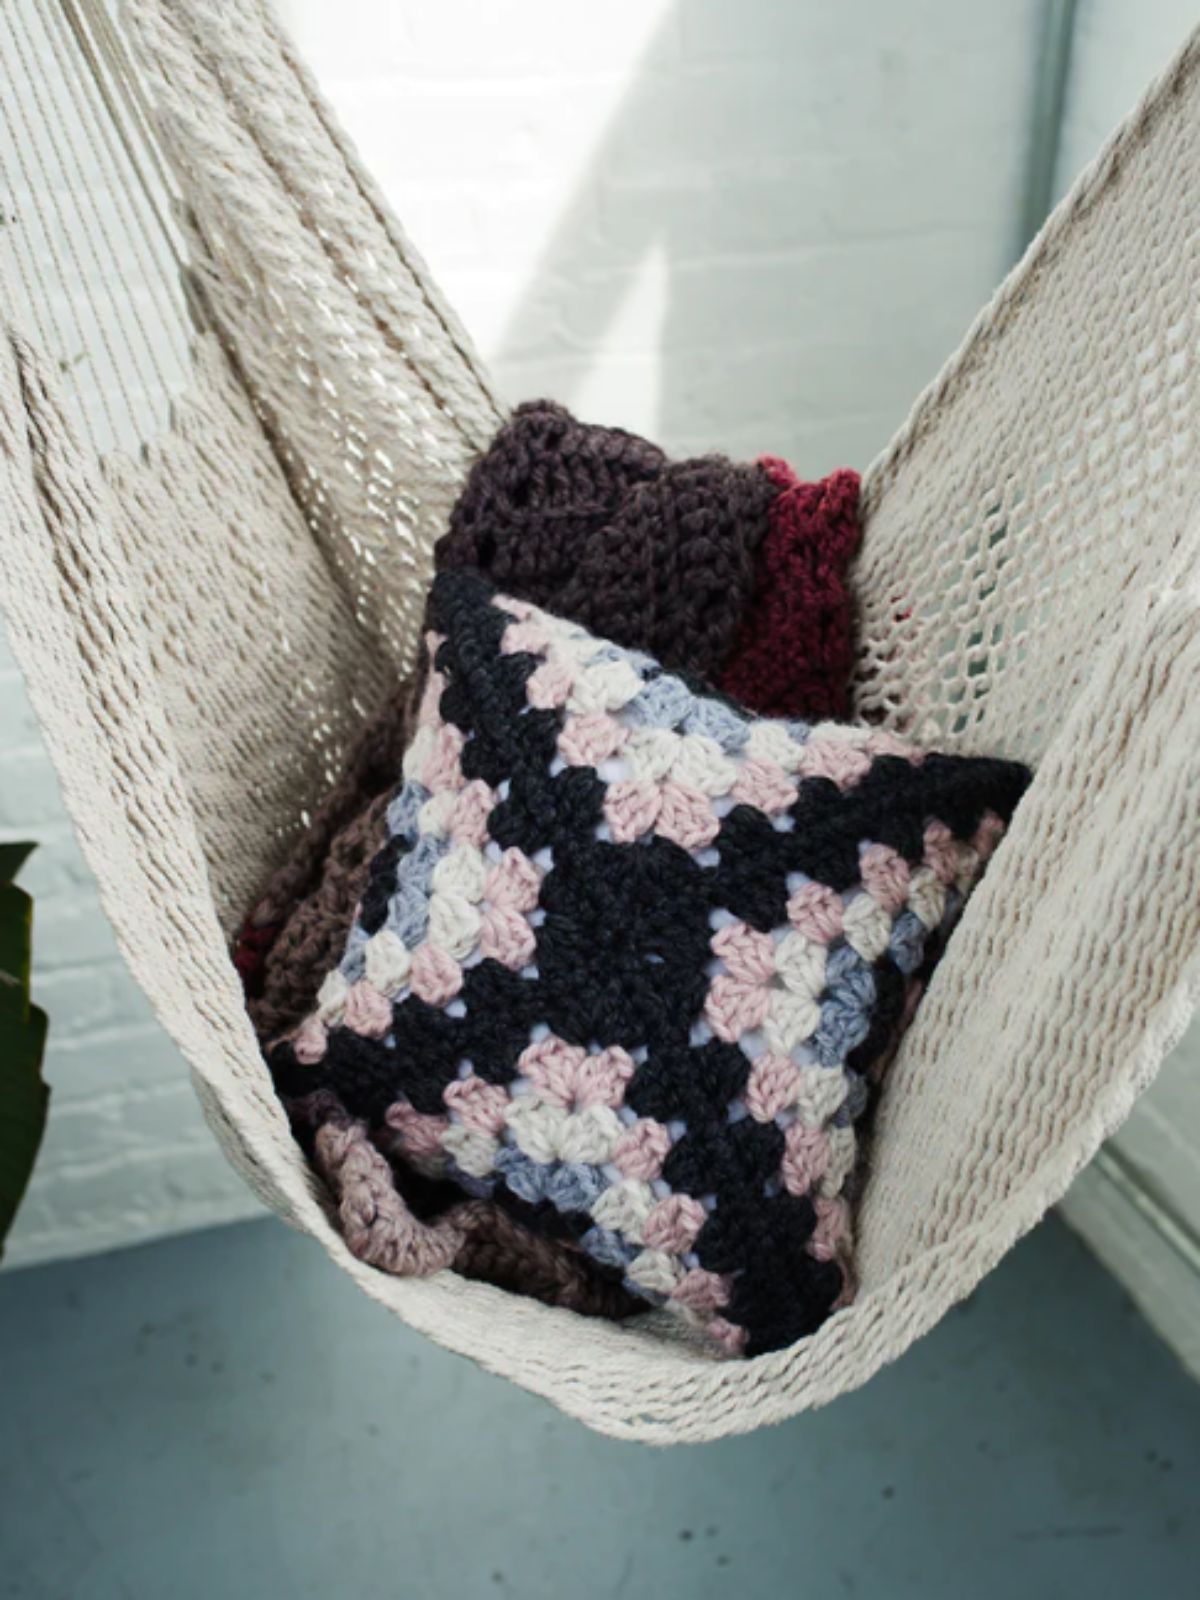 Mandy crochet granny square crochet pillow pattern